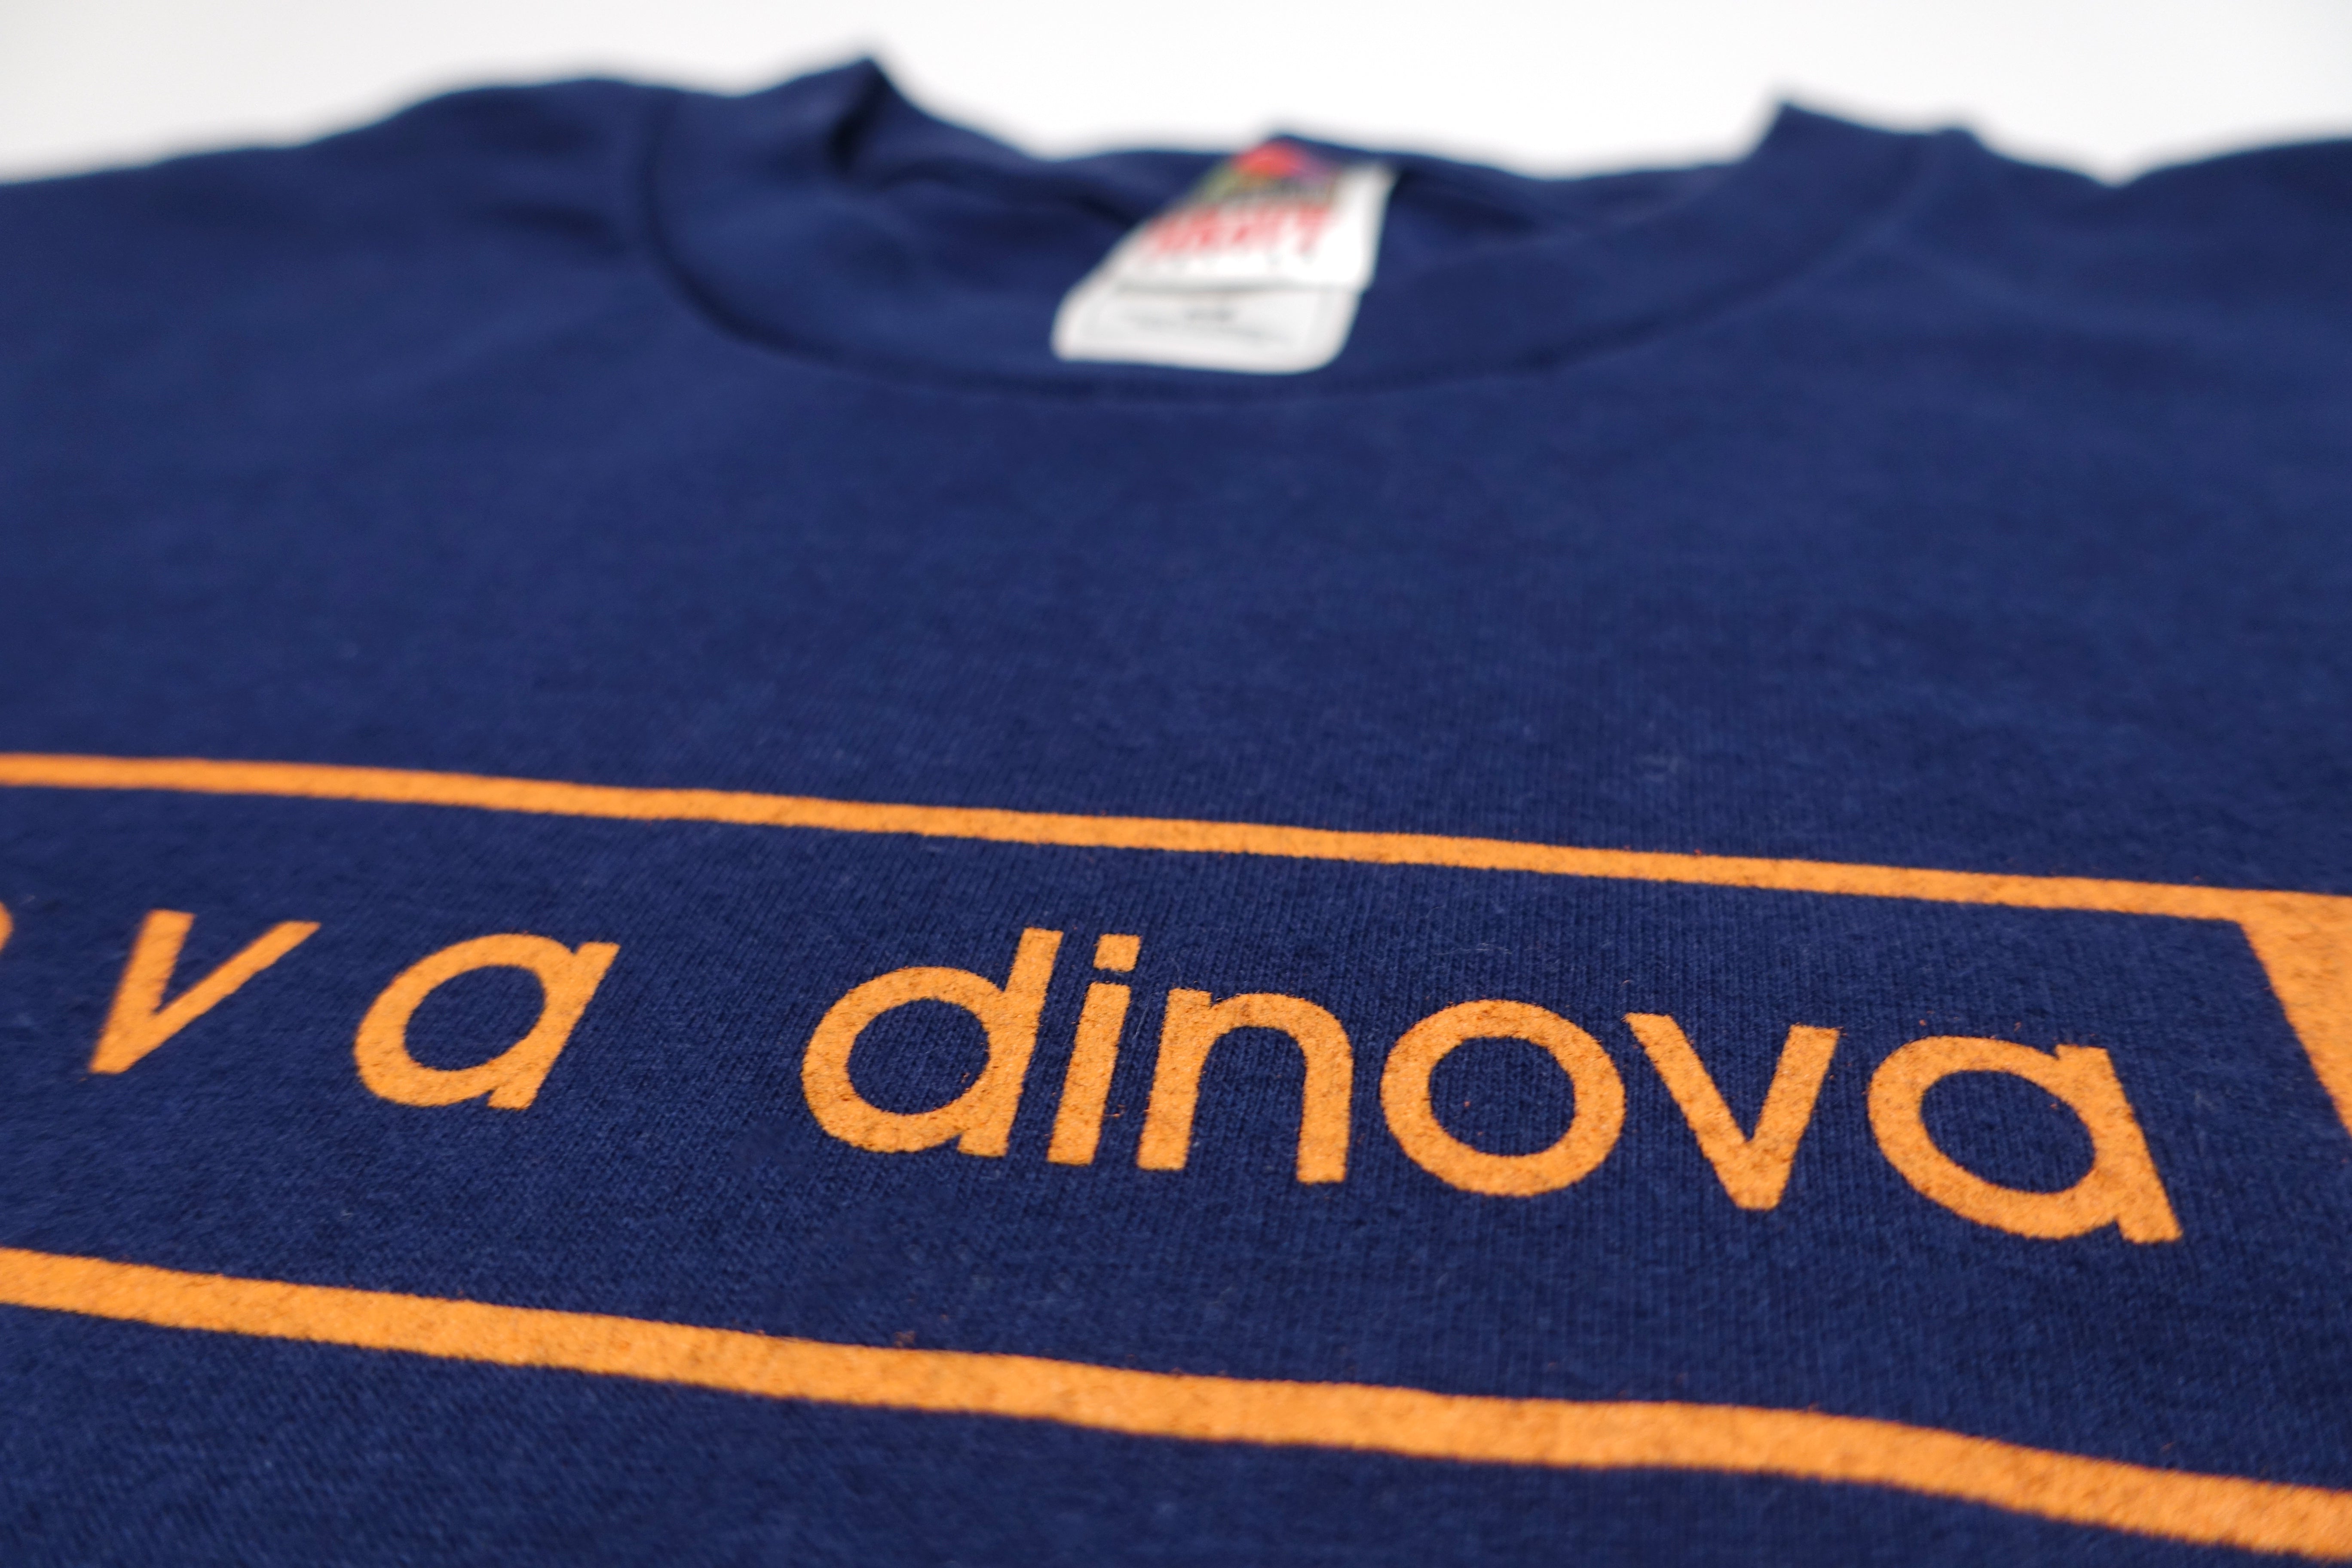 Neva Dinova ‎– Candle / Neva Dinova 2002 Tour Shirt Size Medium